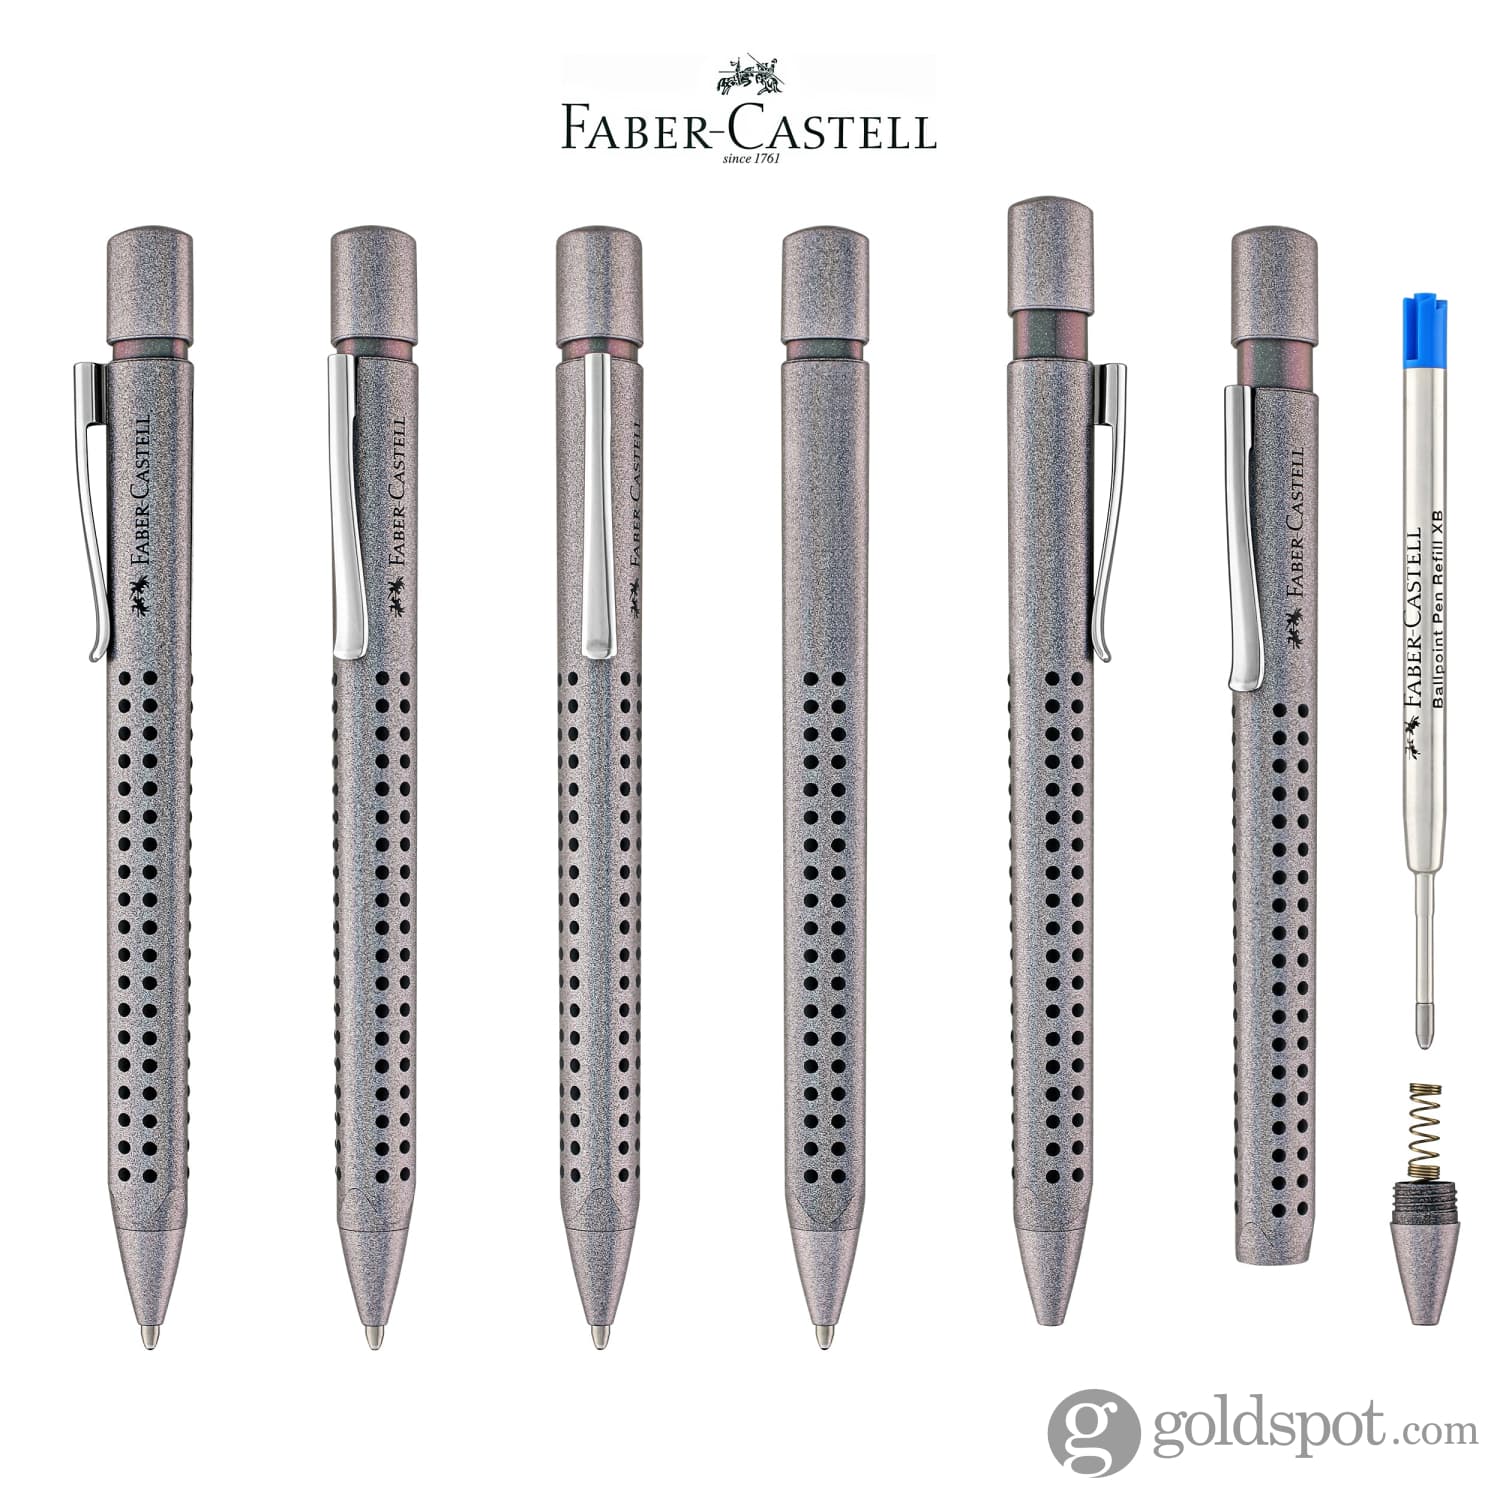 Faber-Castell - Stilografica Grip Edition Glam